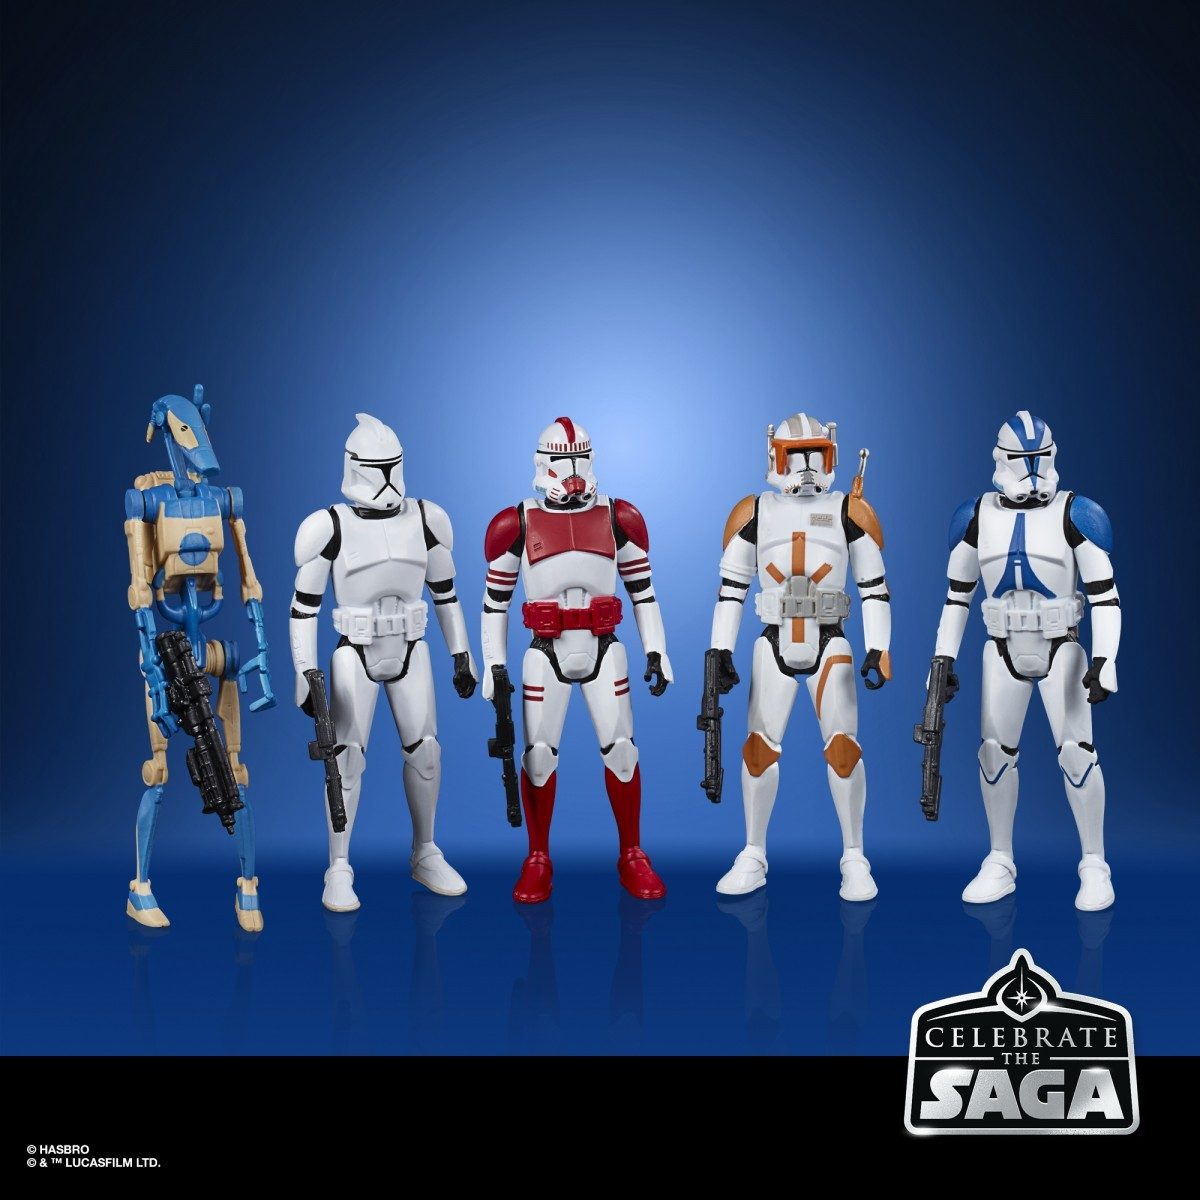 Hasbro's Star Wars: Celebrate the Saga action figure packs revealed